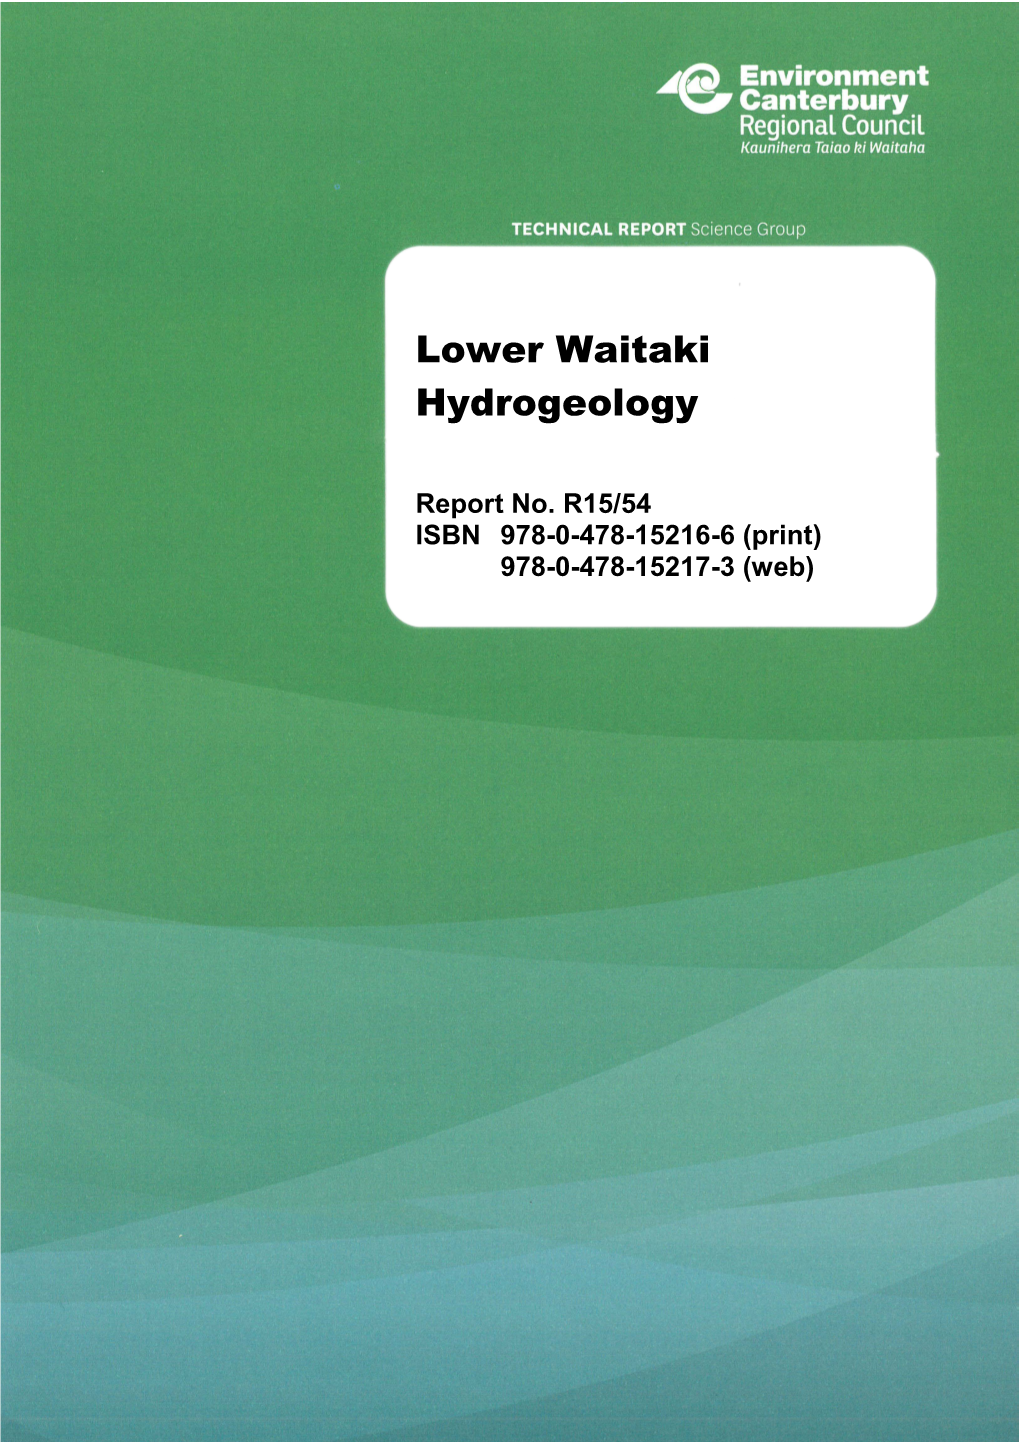 Lower Waitaki Hydrogeology